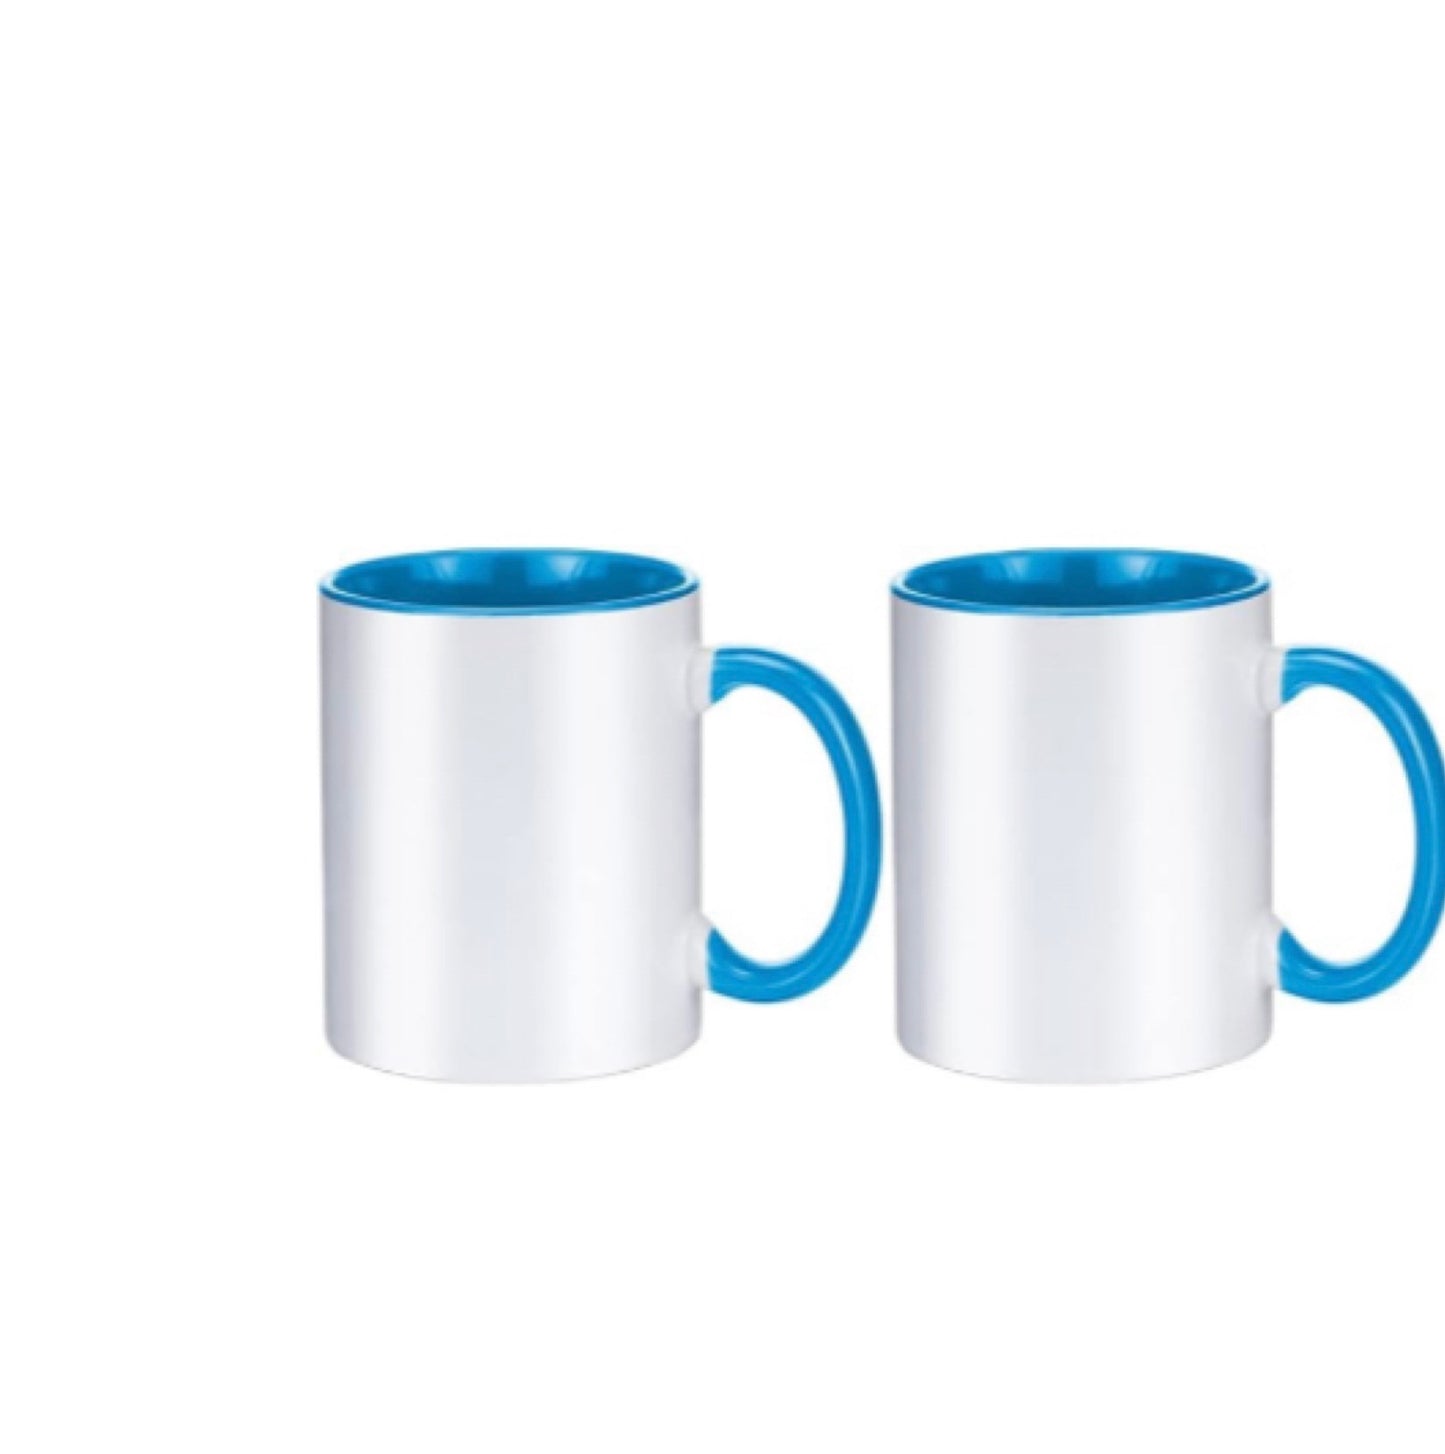 Blue and white mug